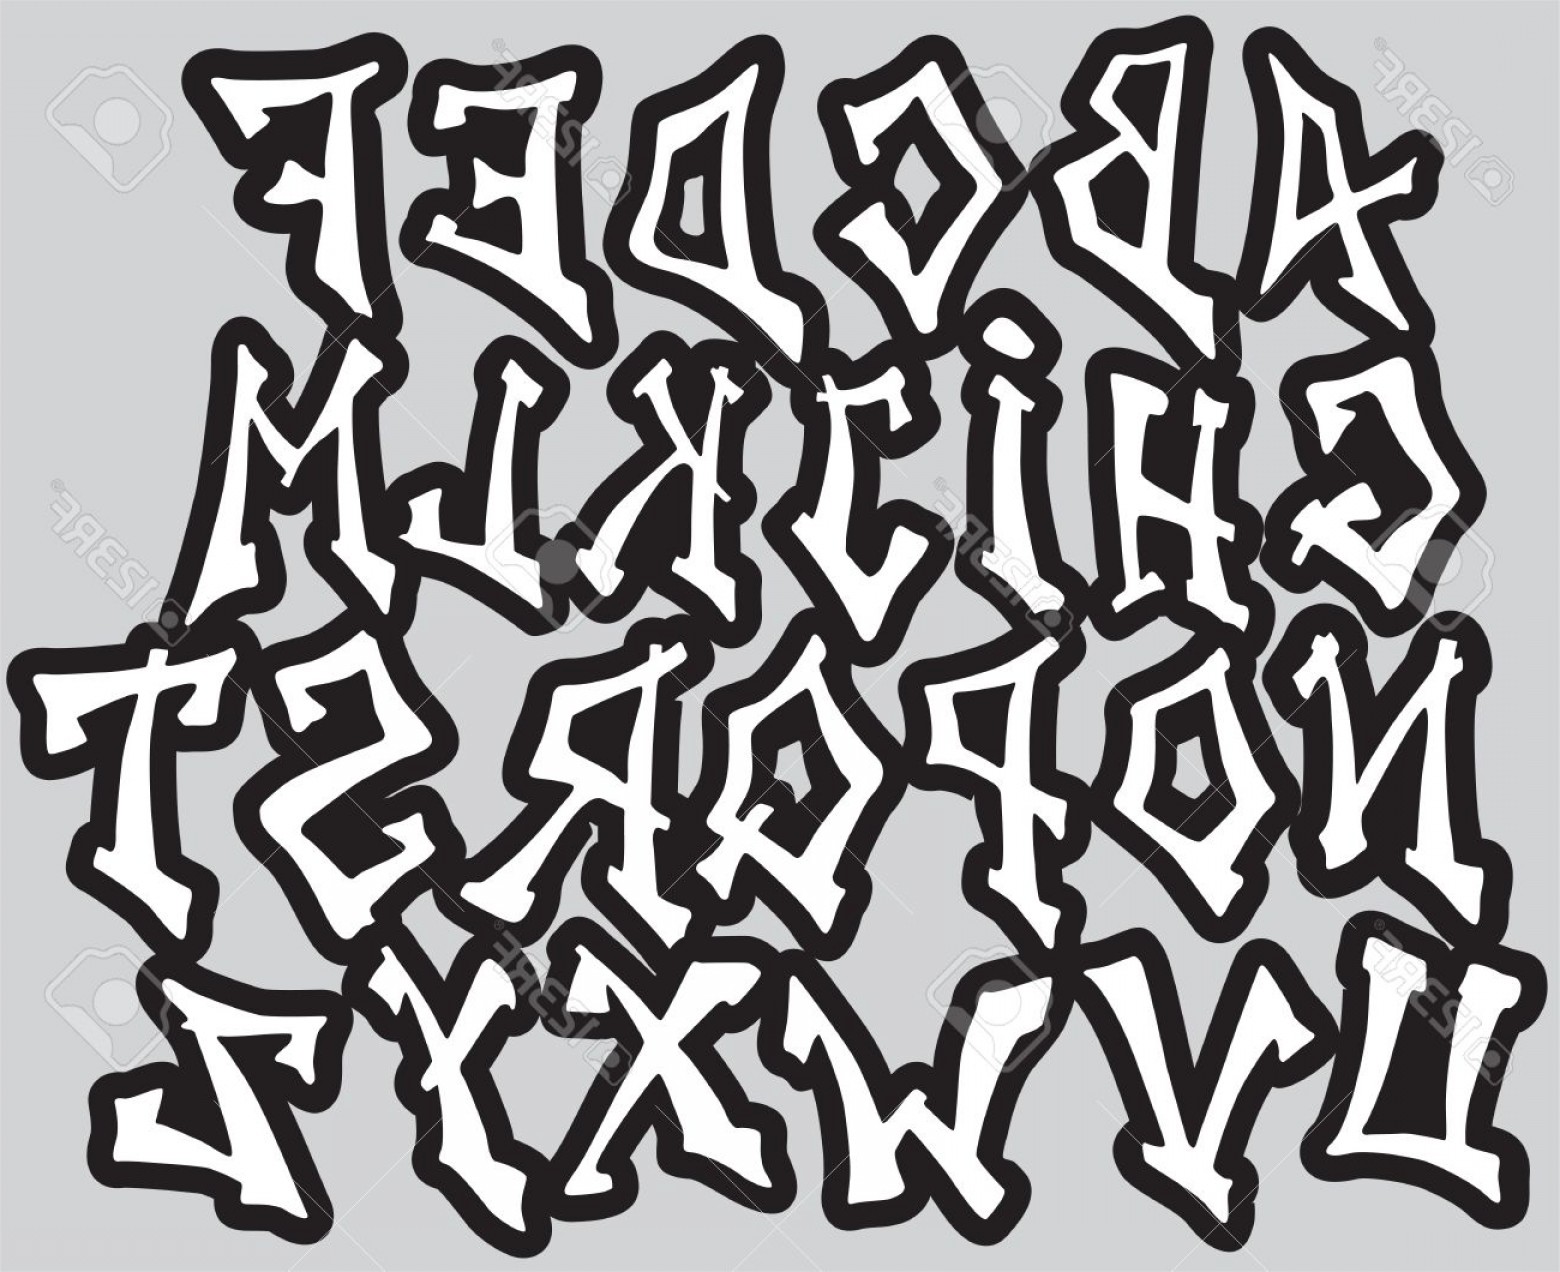 Graffiti Letters Vector at Vectorified.com | Collection of Graffiti ...